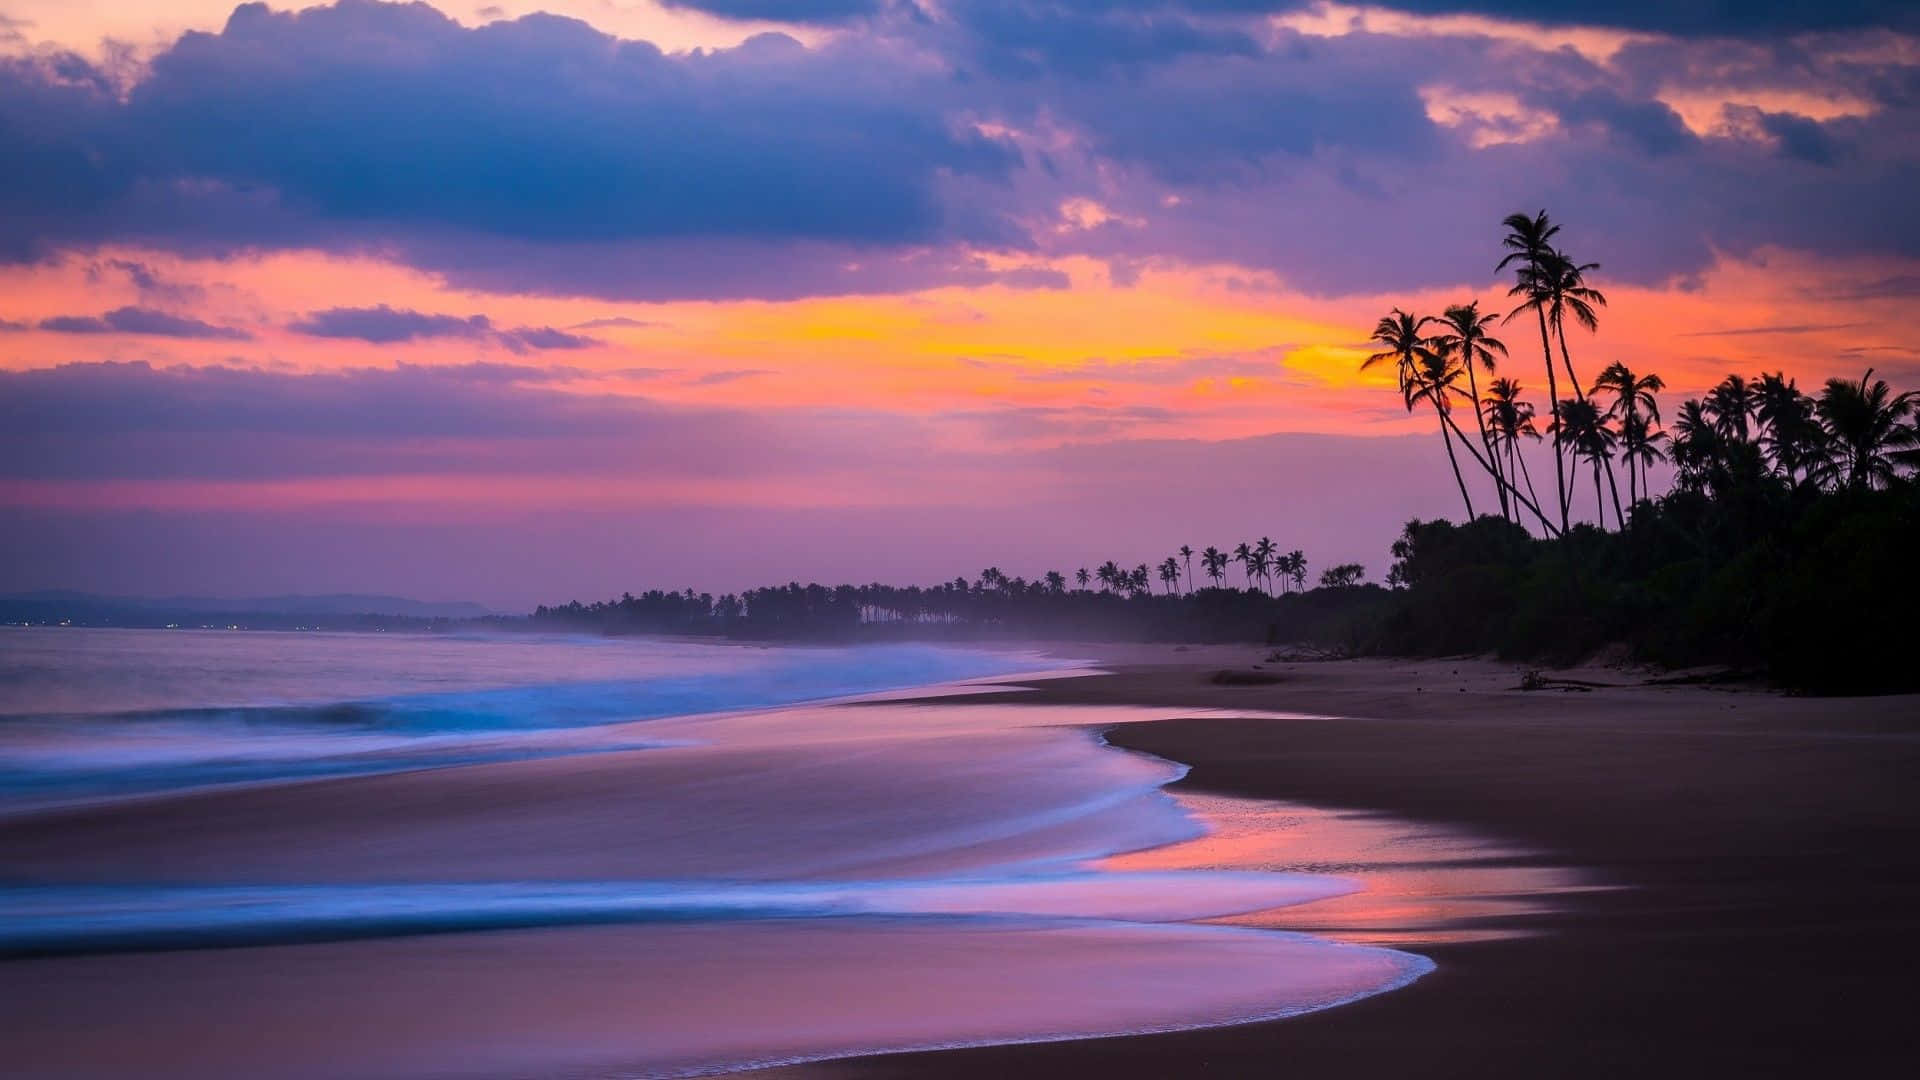 720p Beach Sunset Background